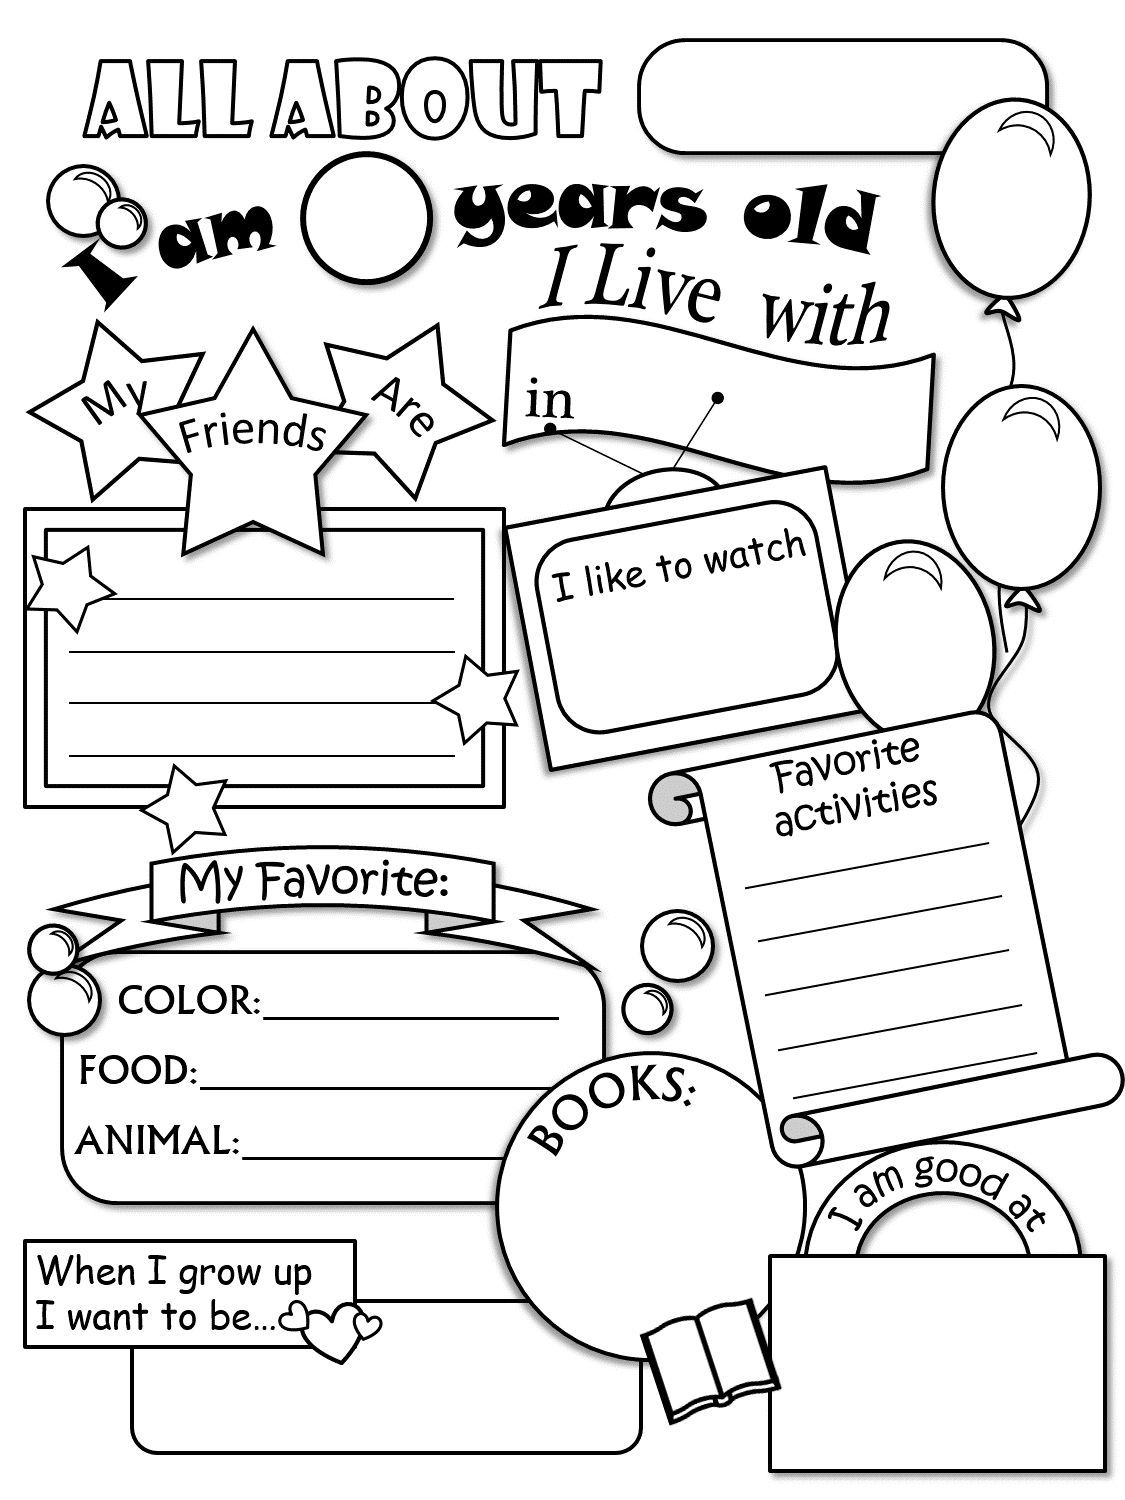 All About Me Worksheet Freebie - Cute! | Language Arts | Pinterest - Free Printable All About Me Worksheet